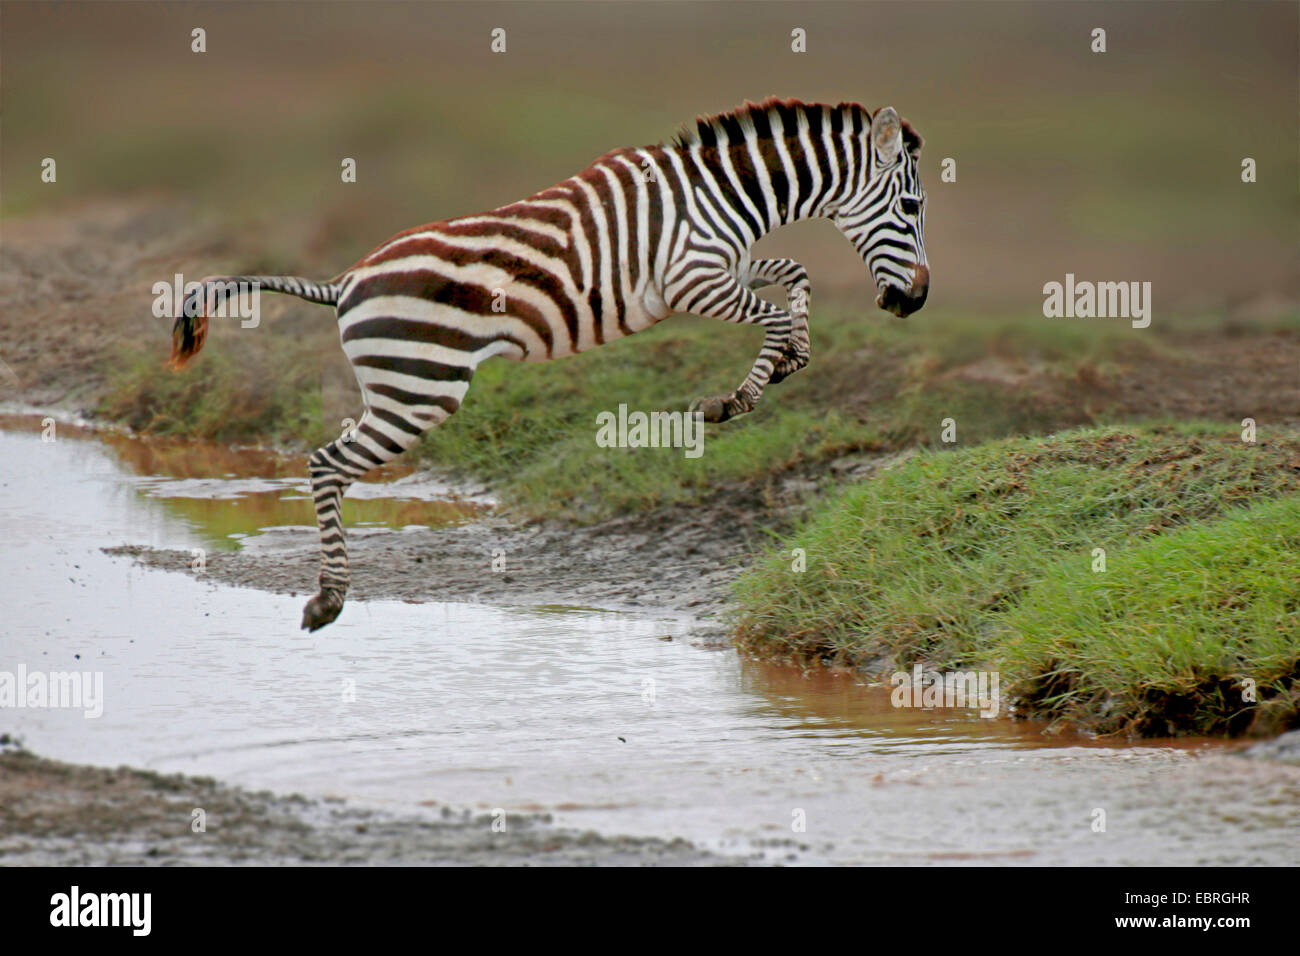 Common Zebra (Equus quagga), jumping over a creek, Tanzania, Serengeti National Park Stock Photo